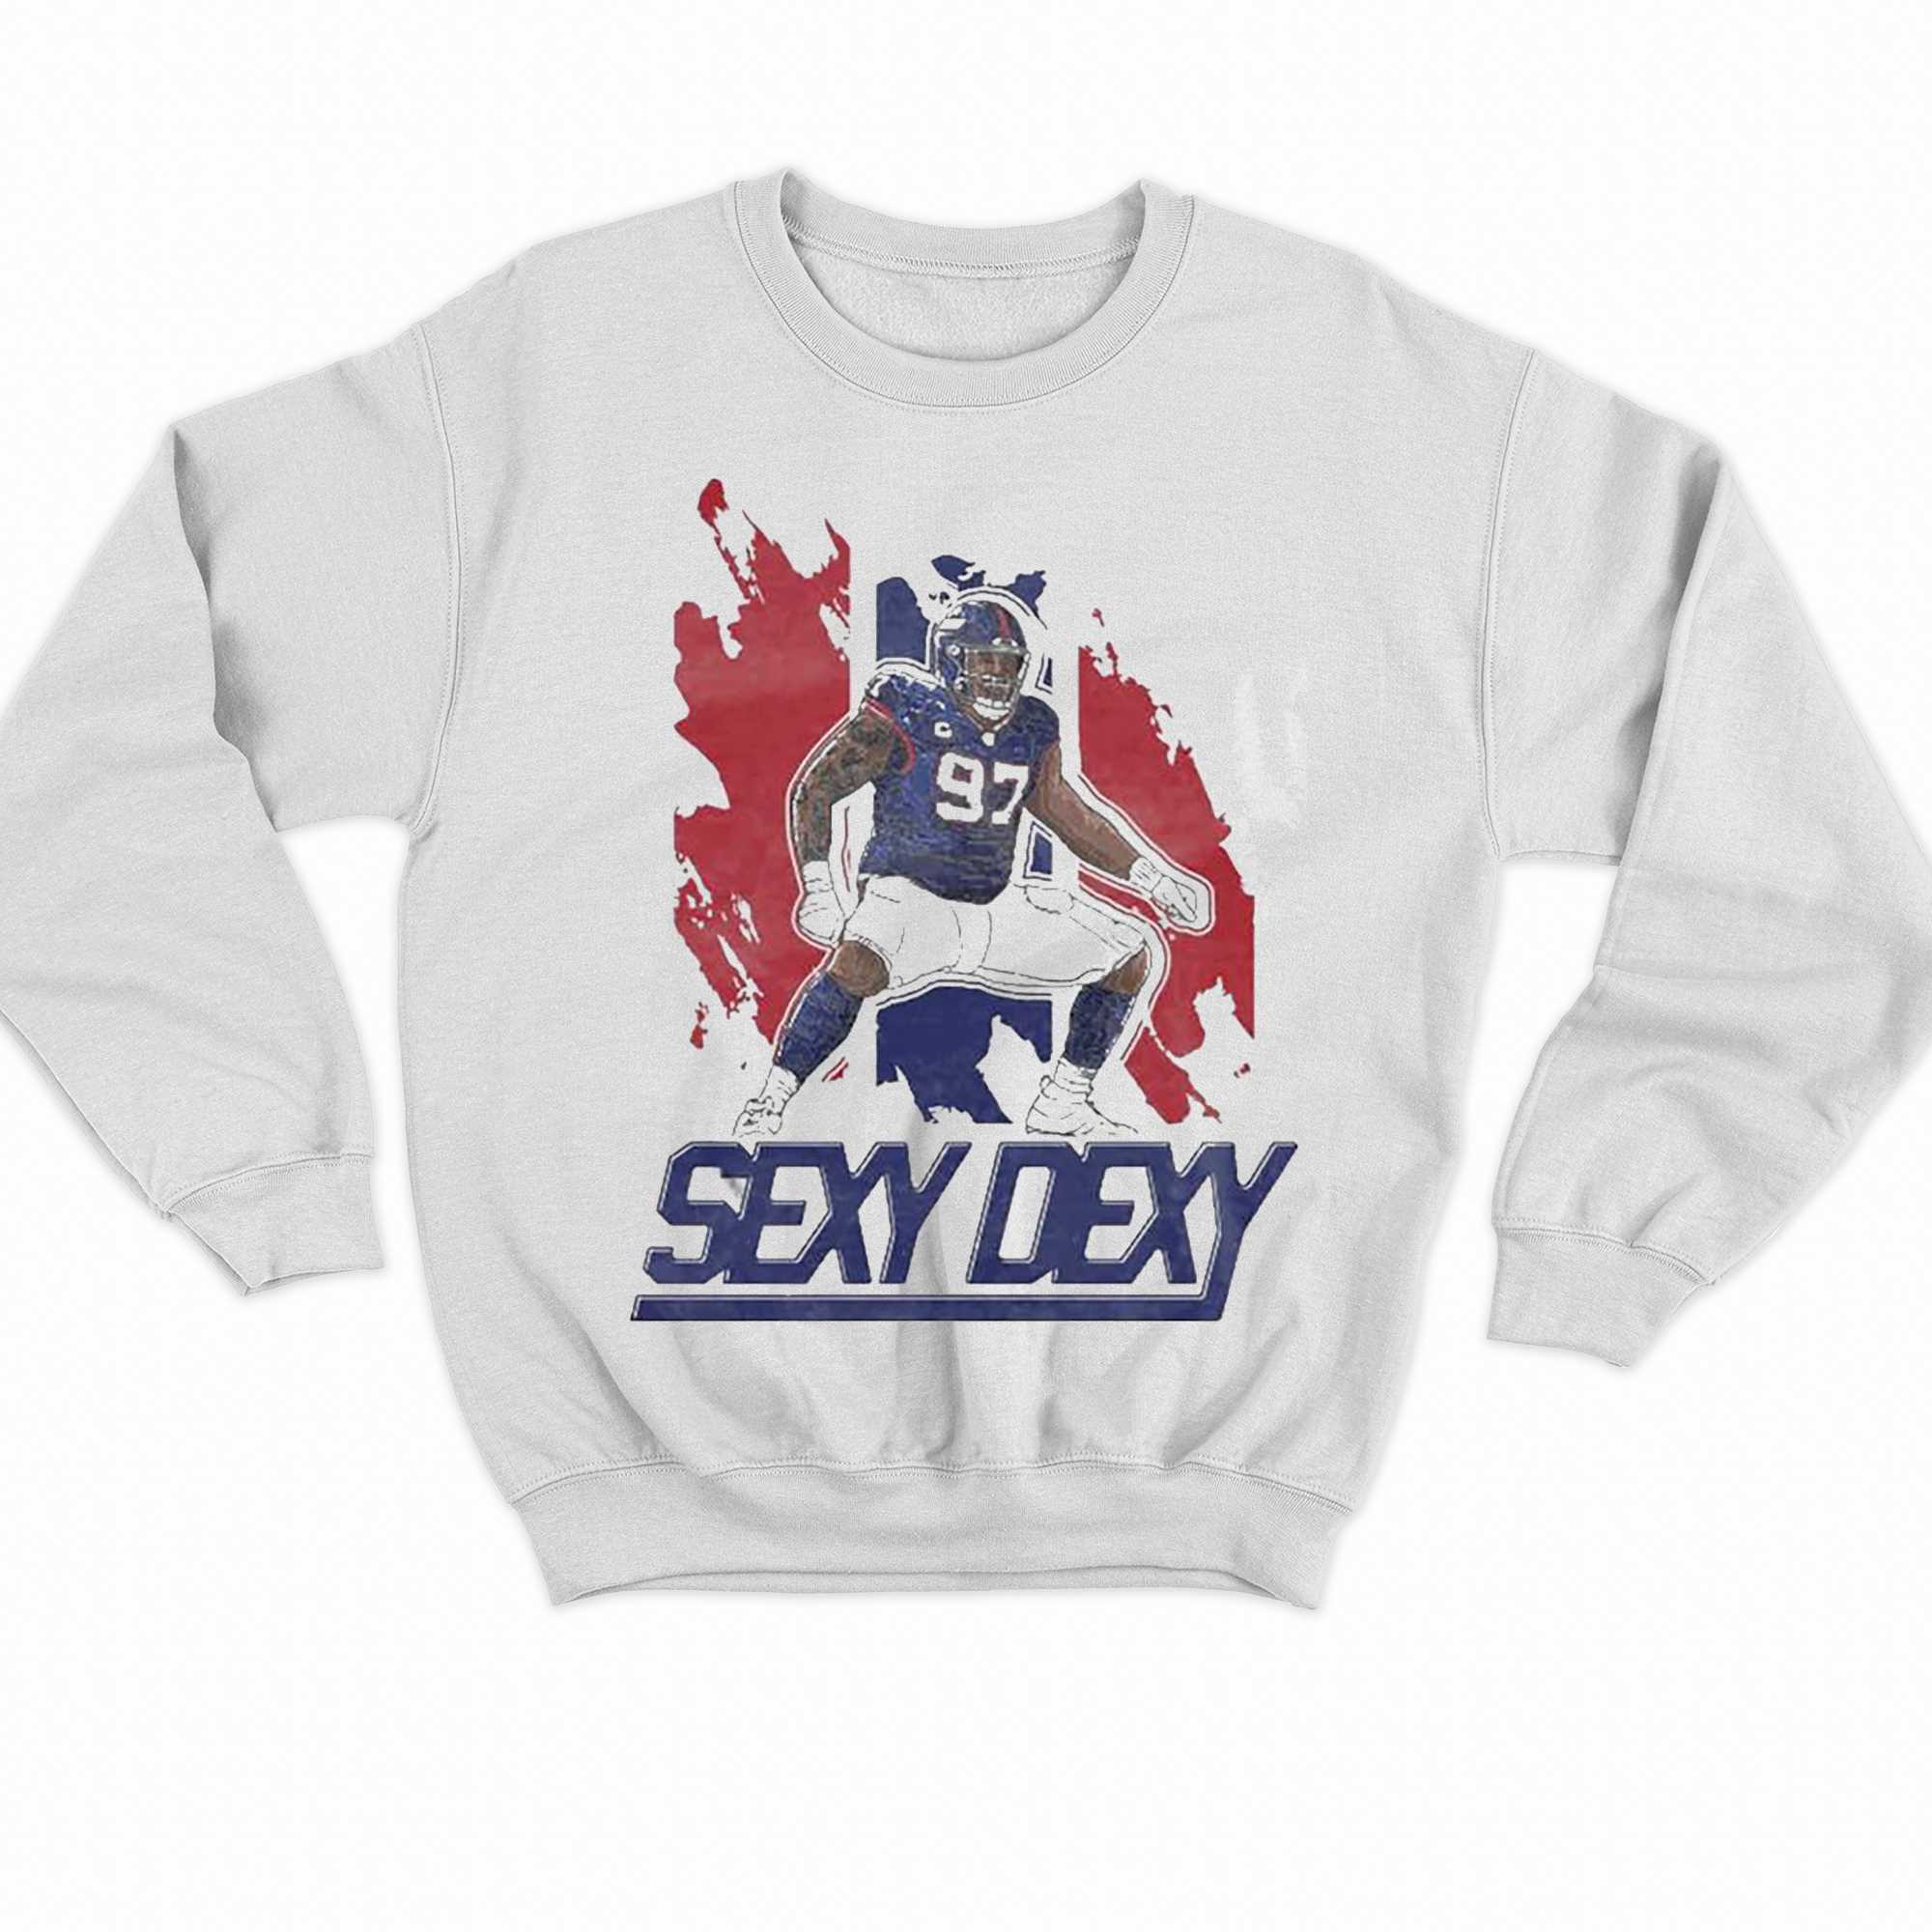 Sexy Dexy New York Giants Shirt 